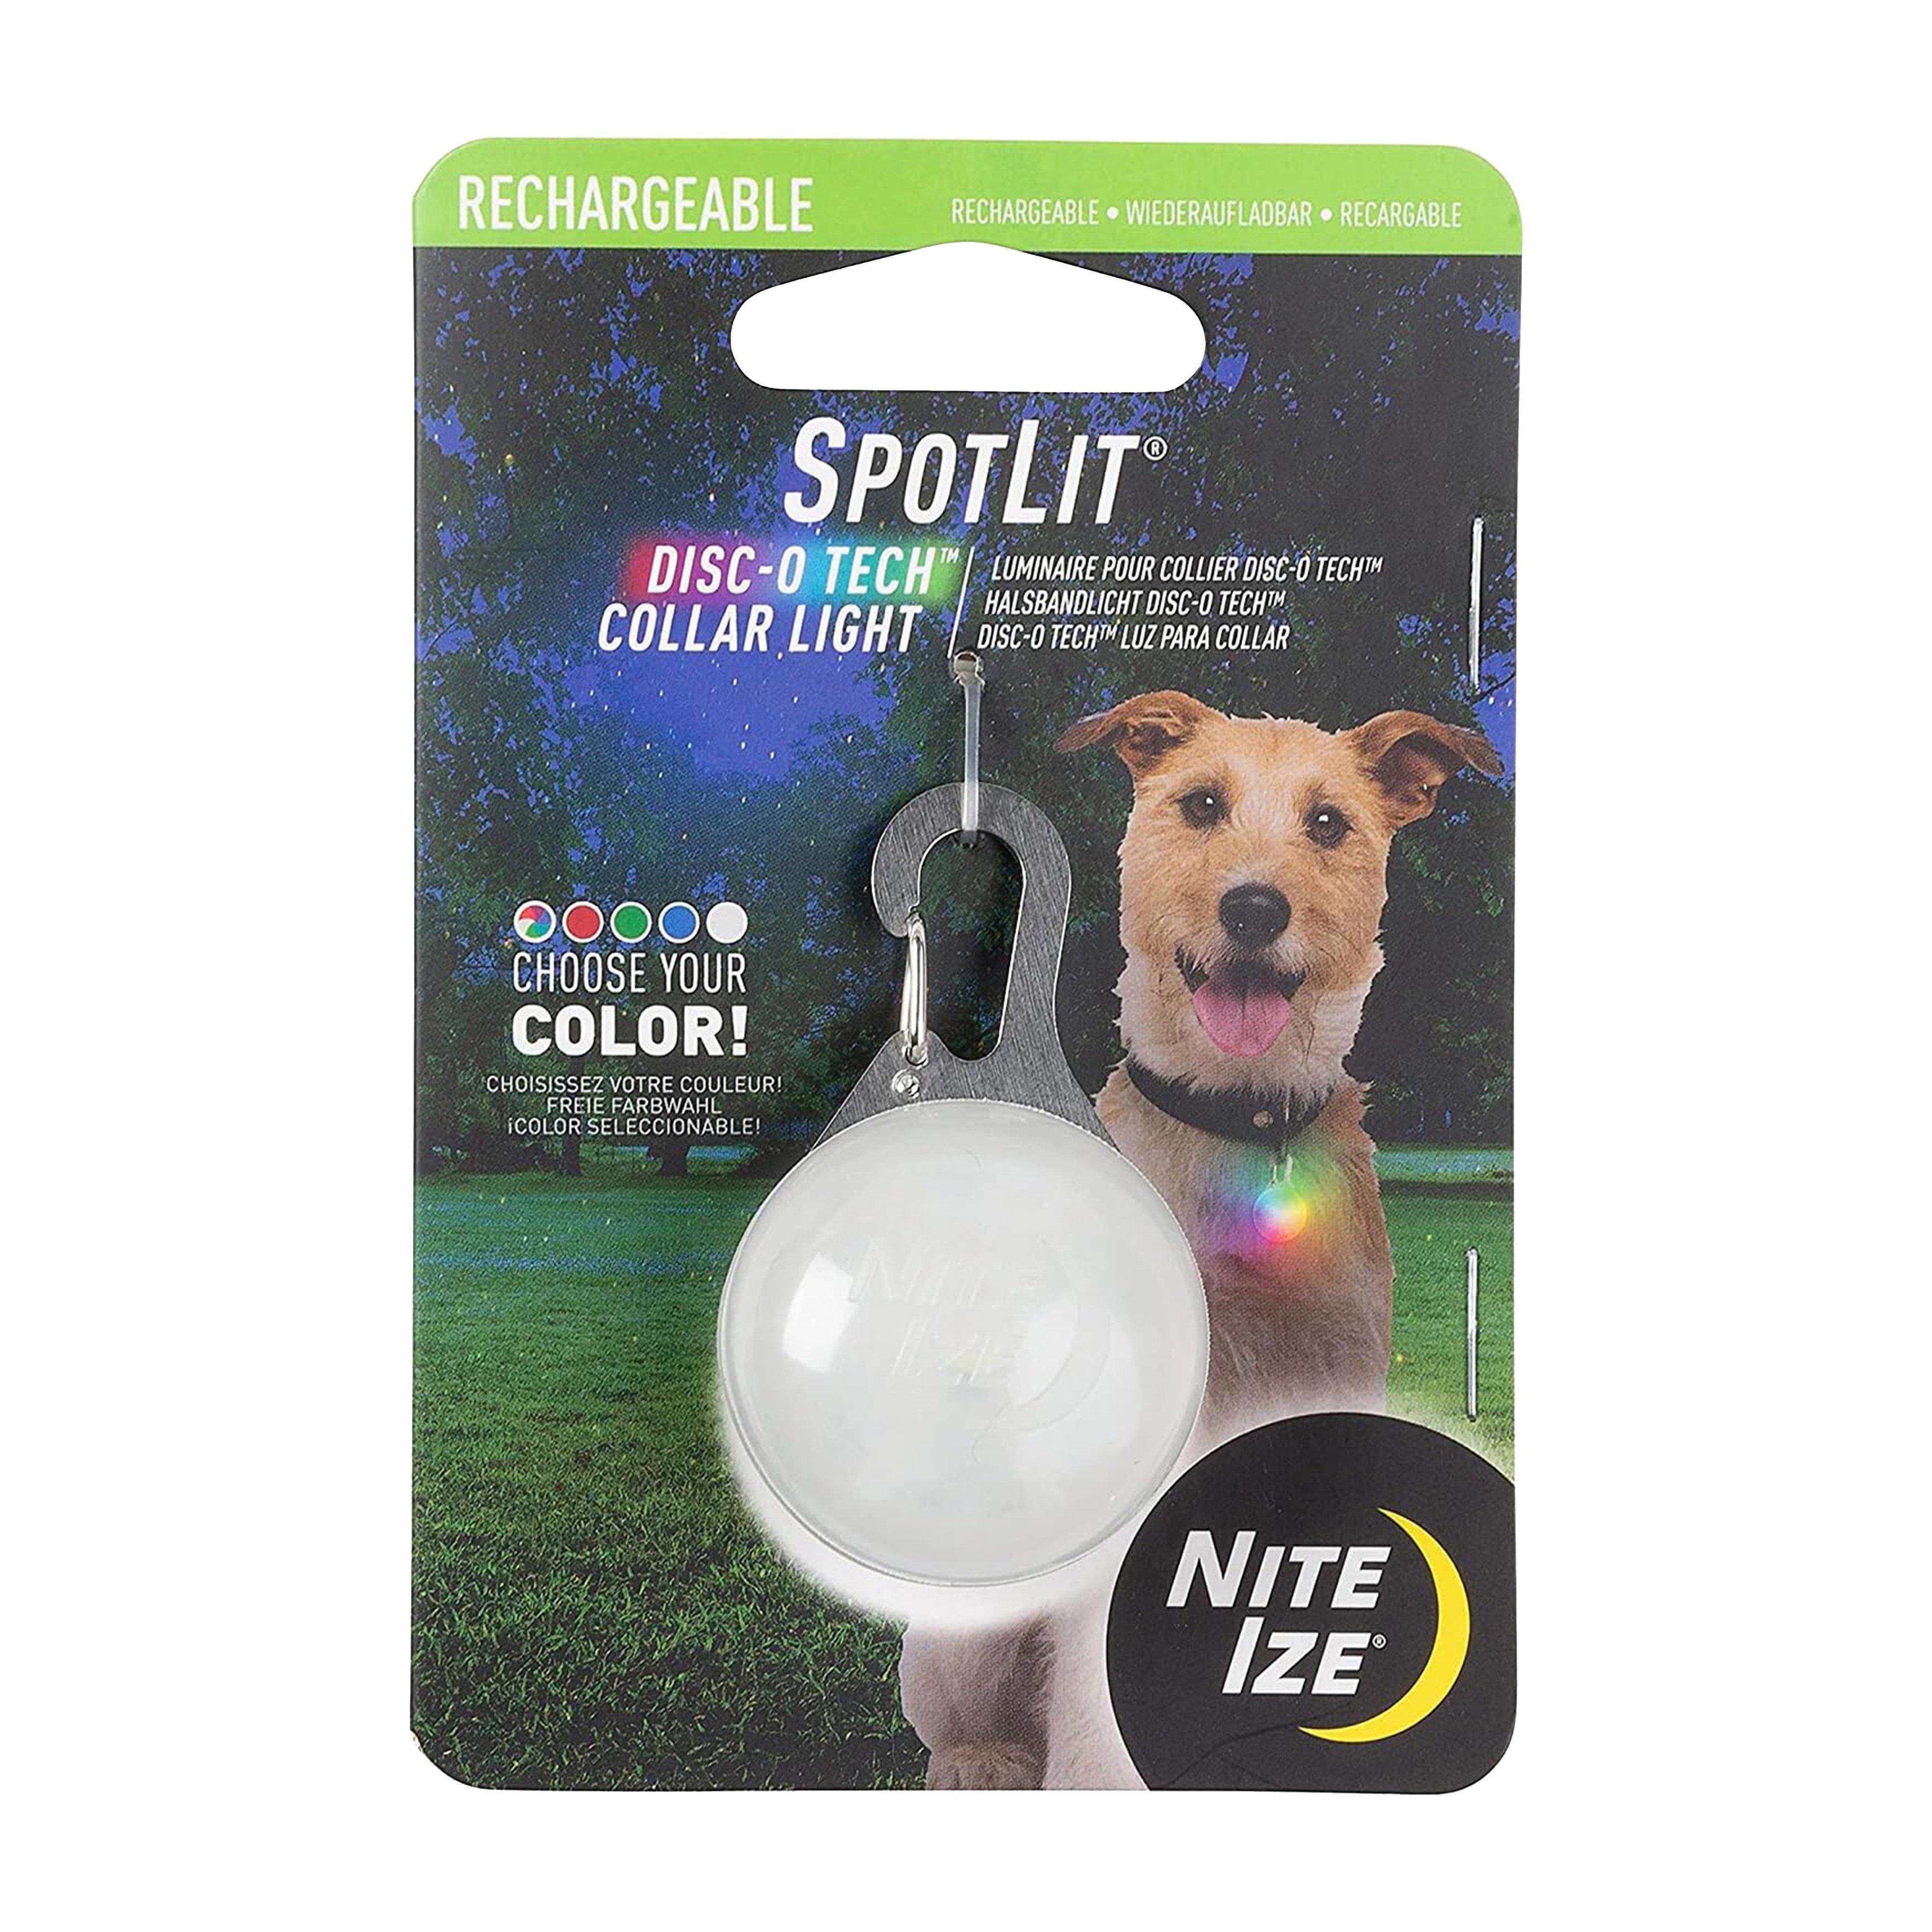 Spotlit Rechargeable Collar Light Disco Tech